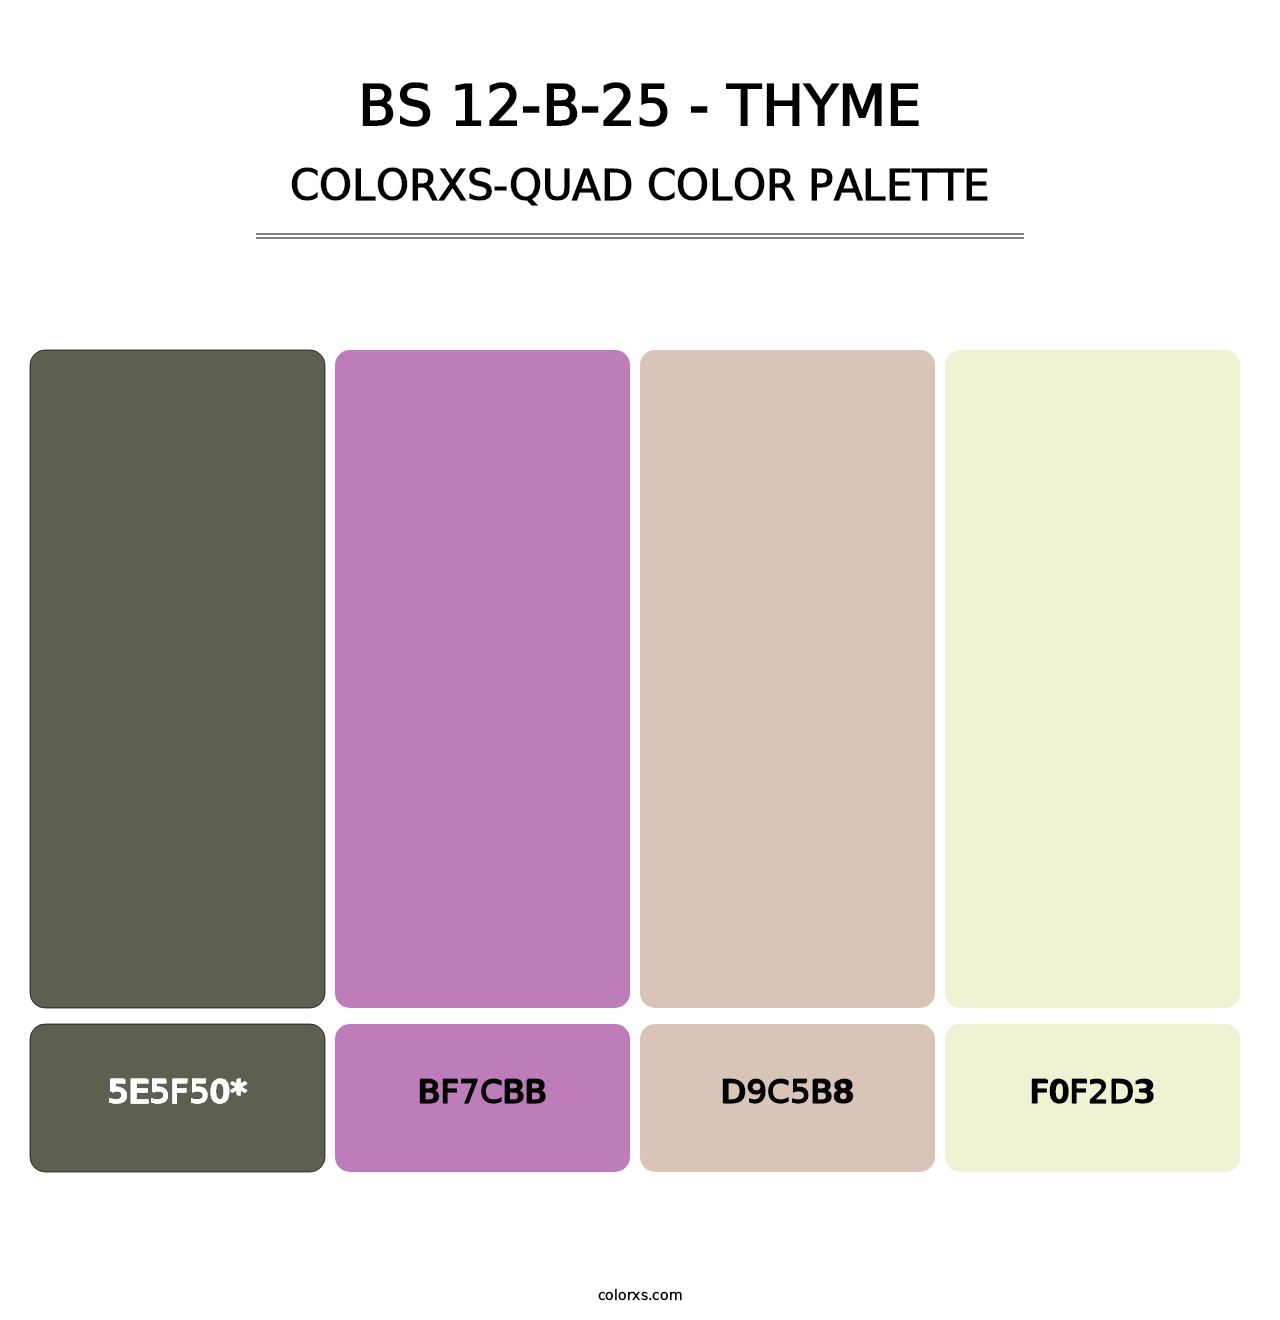 BS 12-B-25 - Thyme - Colorxs Quad Palette